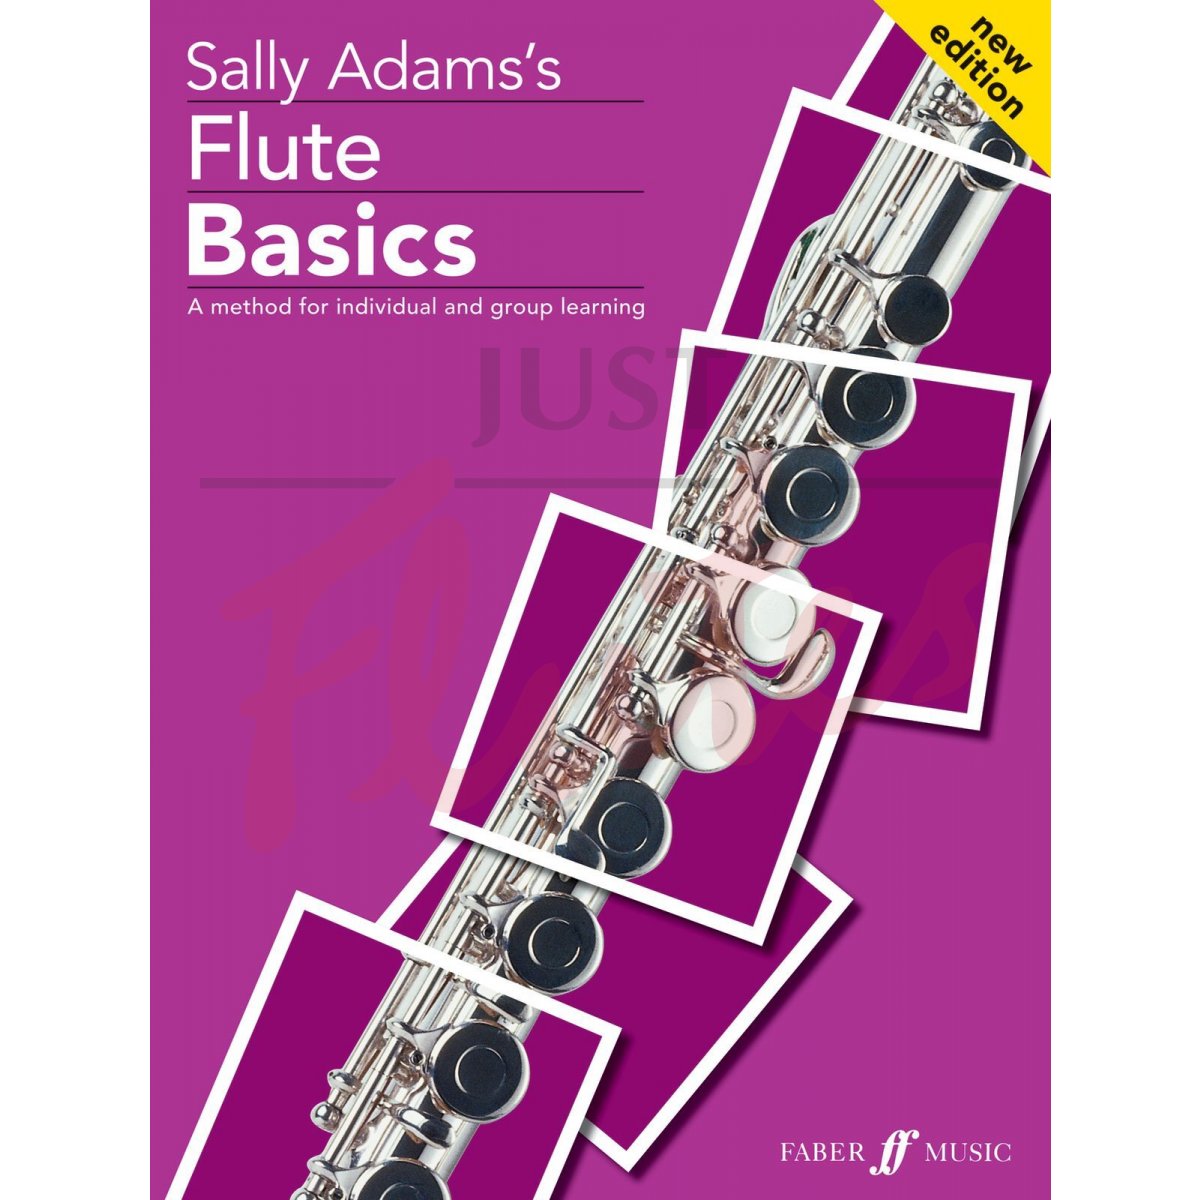 Flute Basics [Pupil's Book]